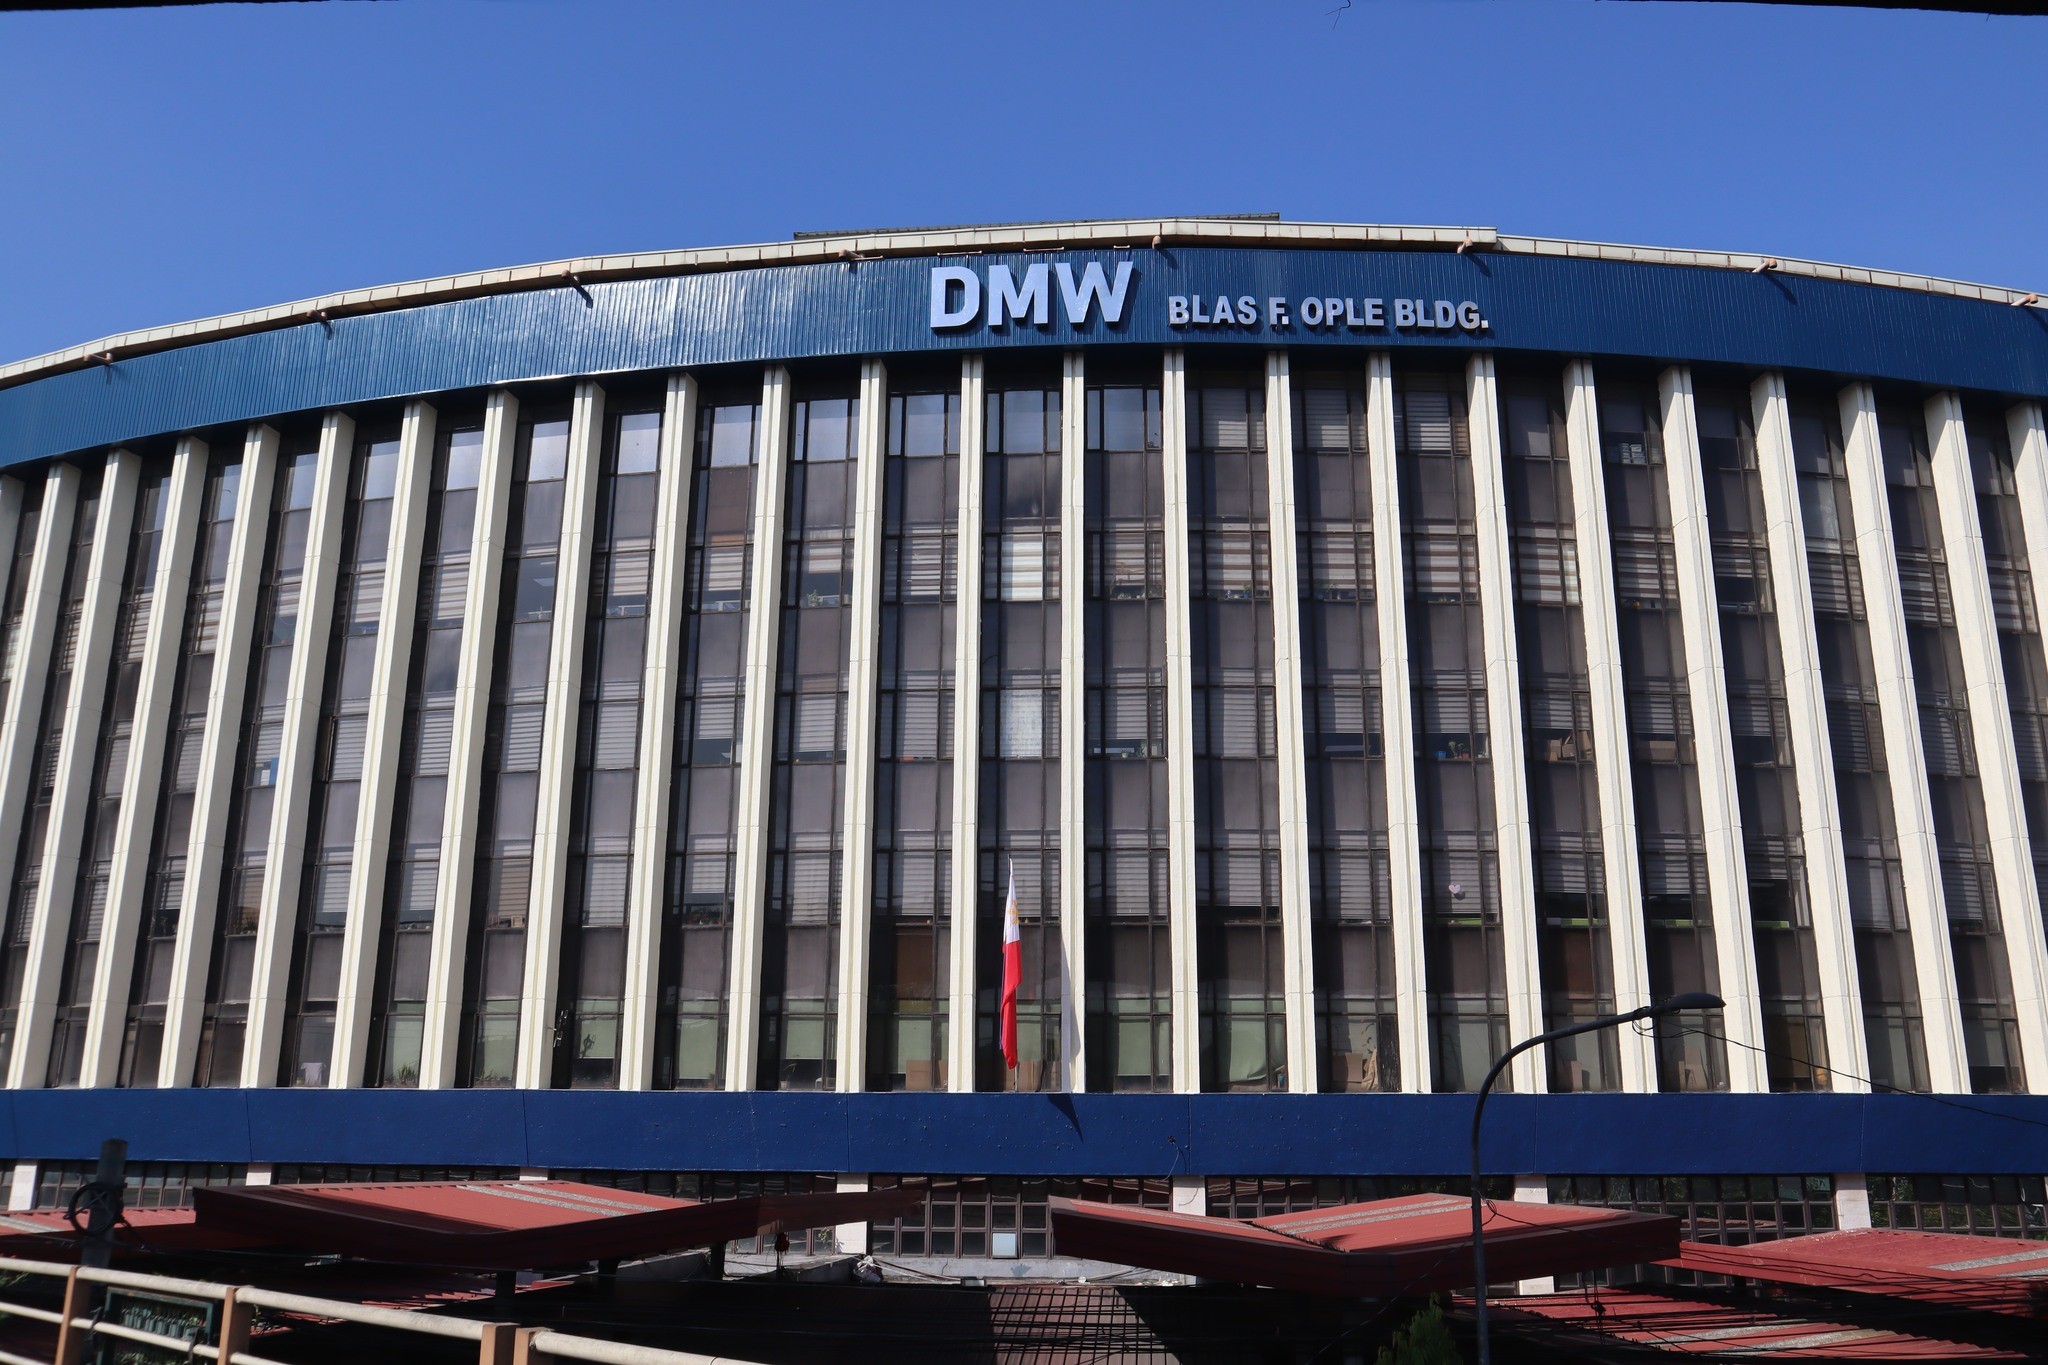 DMW Building